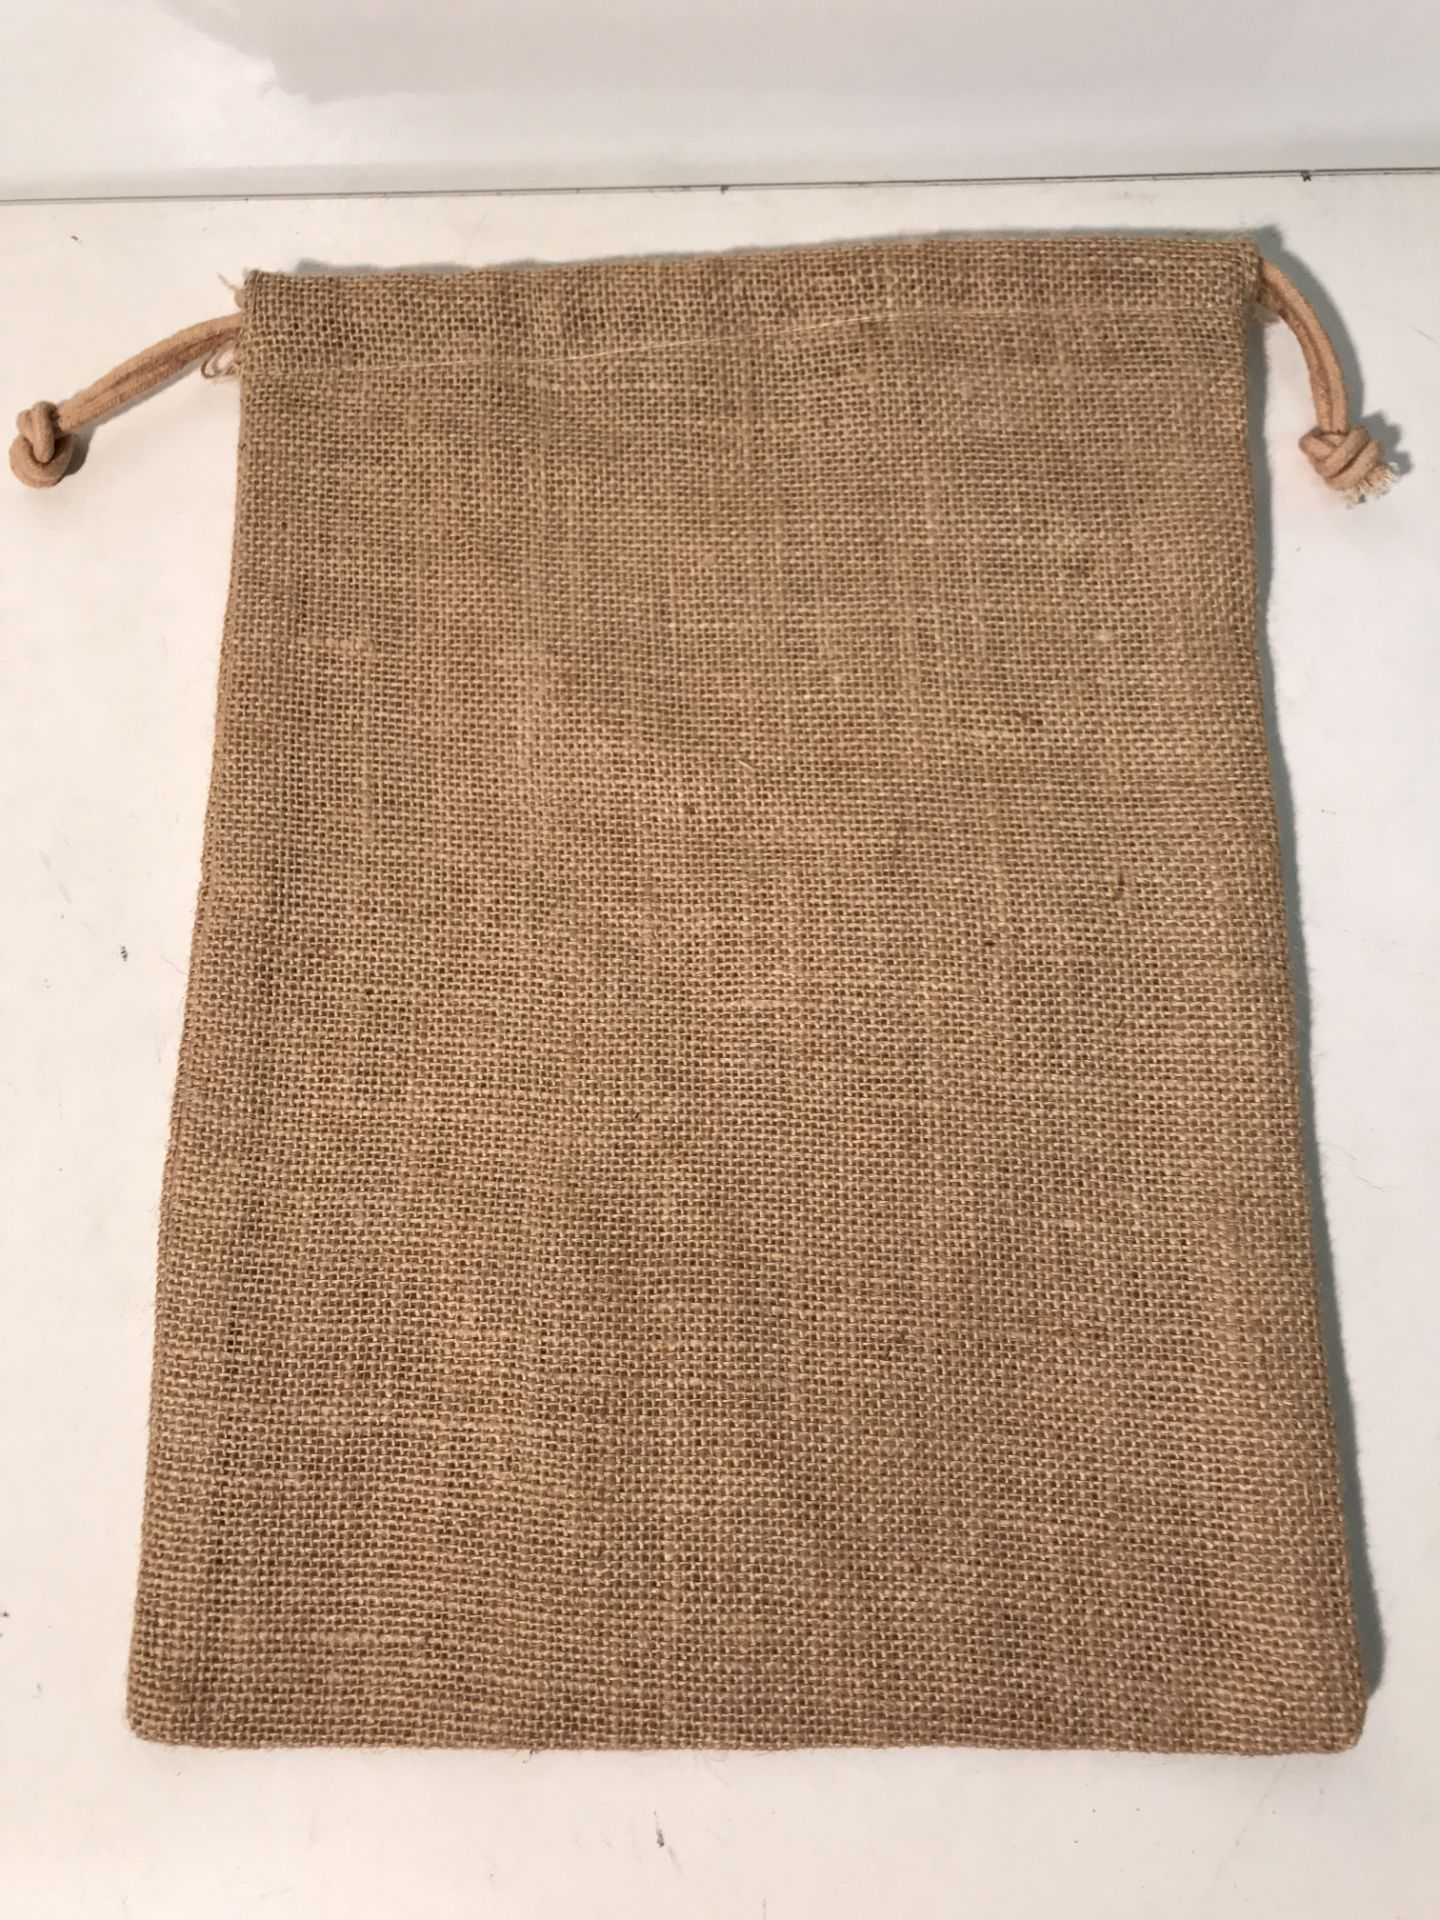 150 Hessian Drawstring Bags - Image 2 of 4